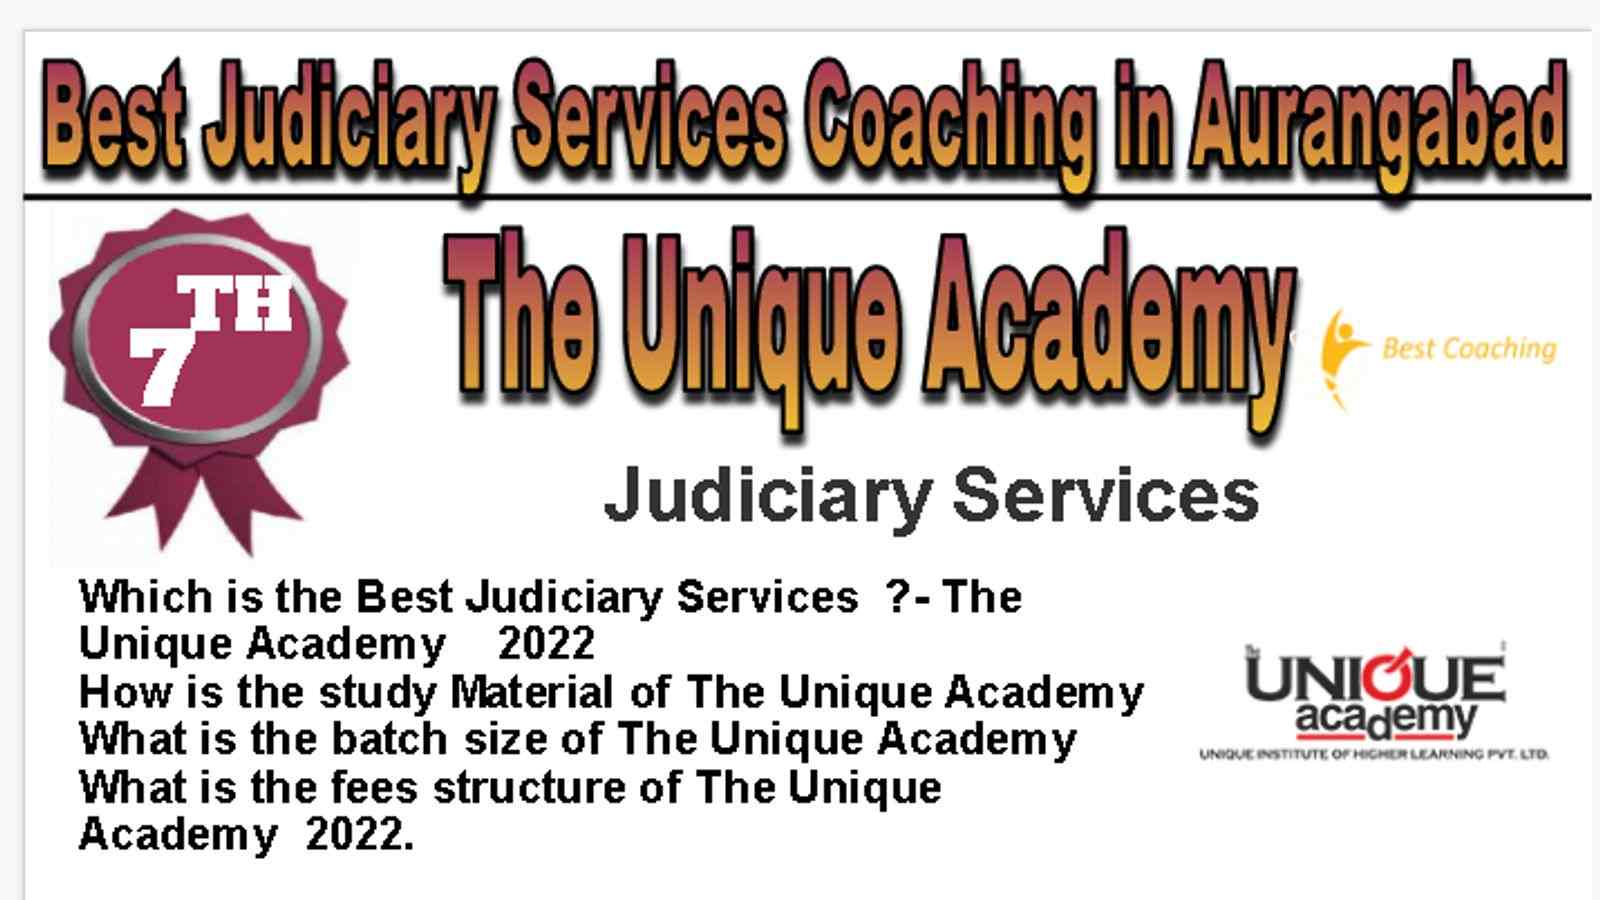 Rank 7 Best Judiciary Services Coaching in Aurangabad